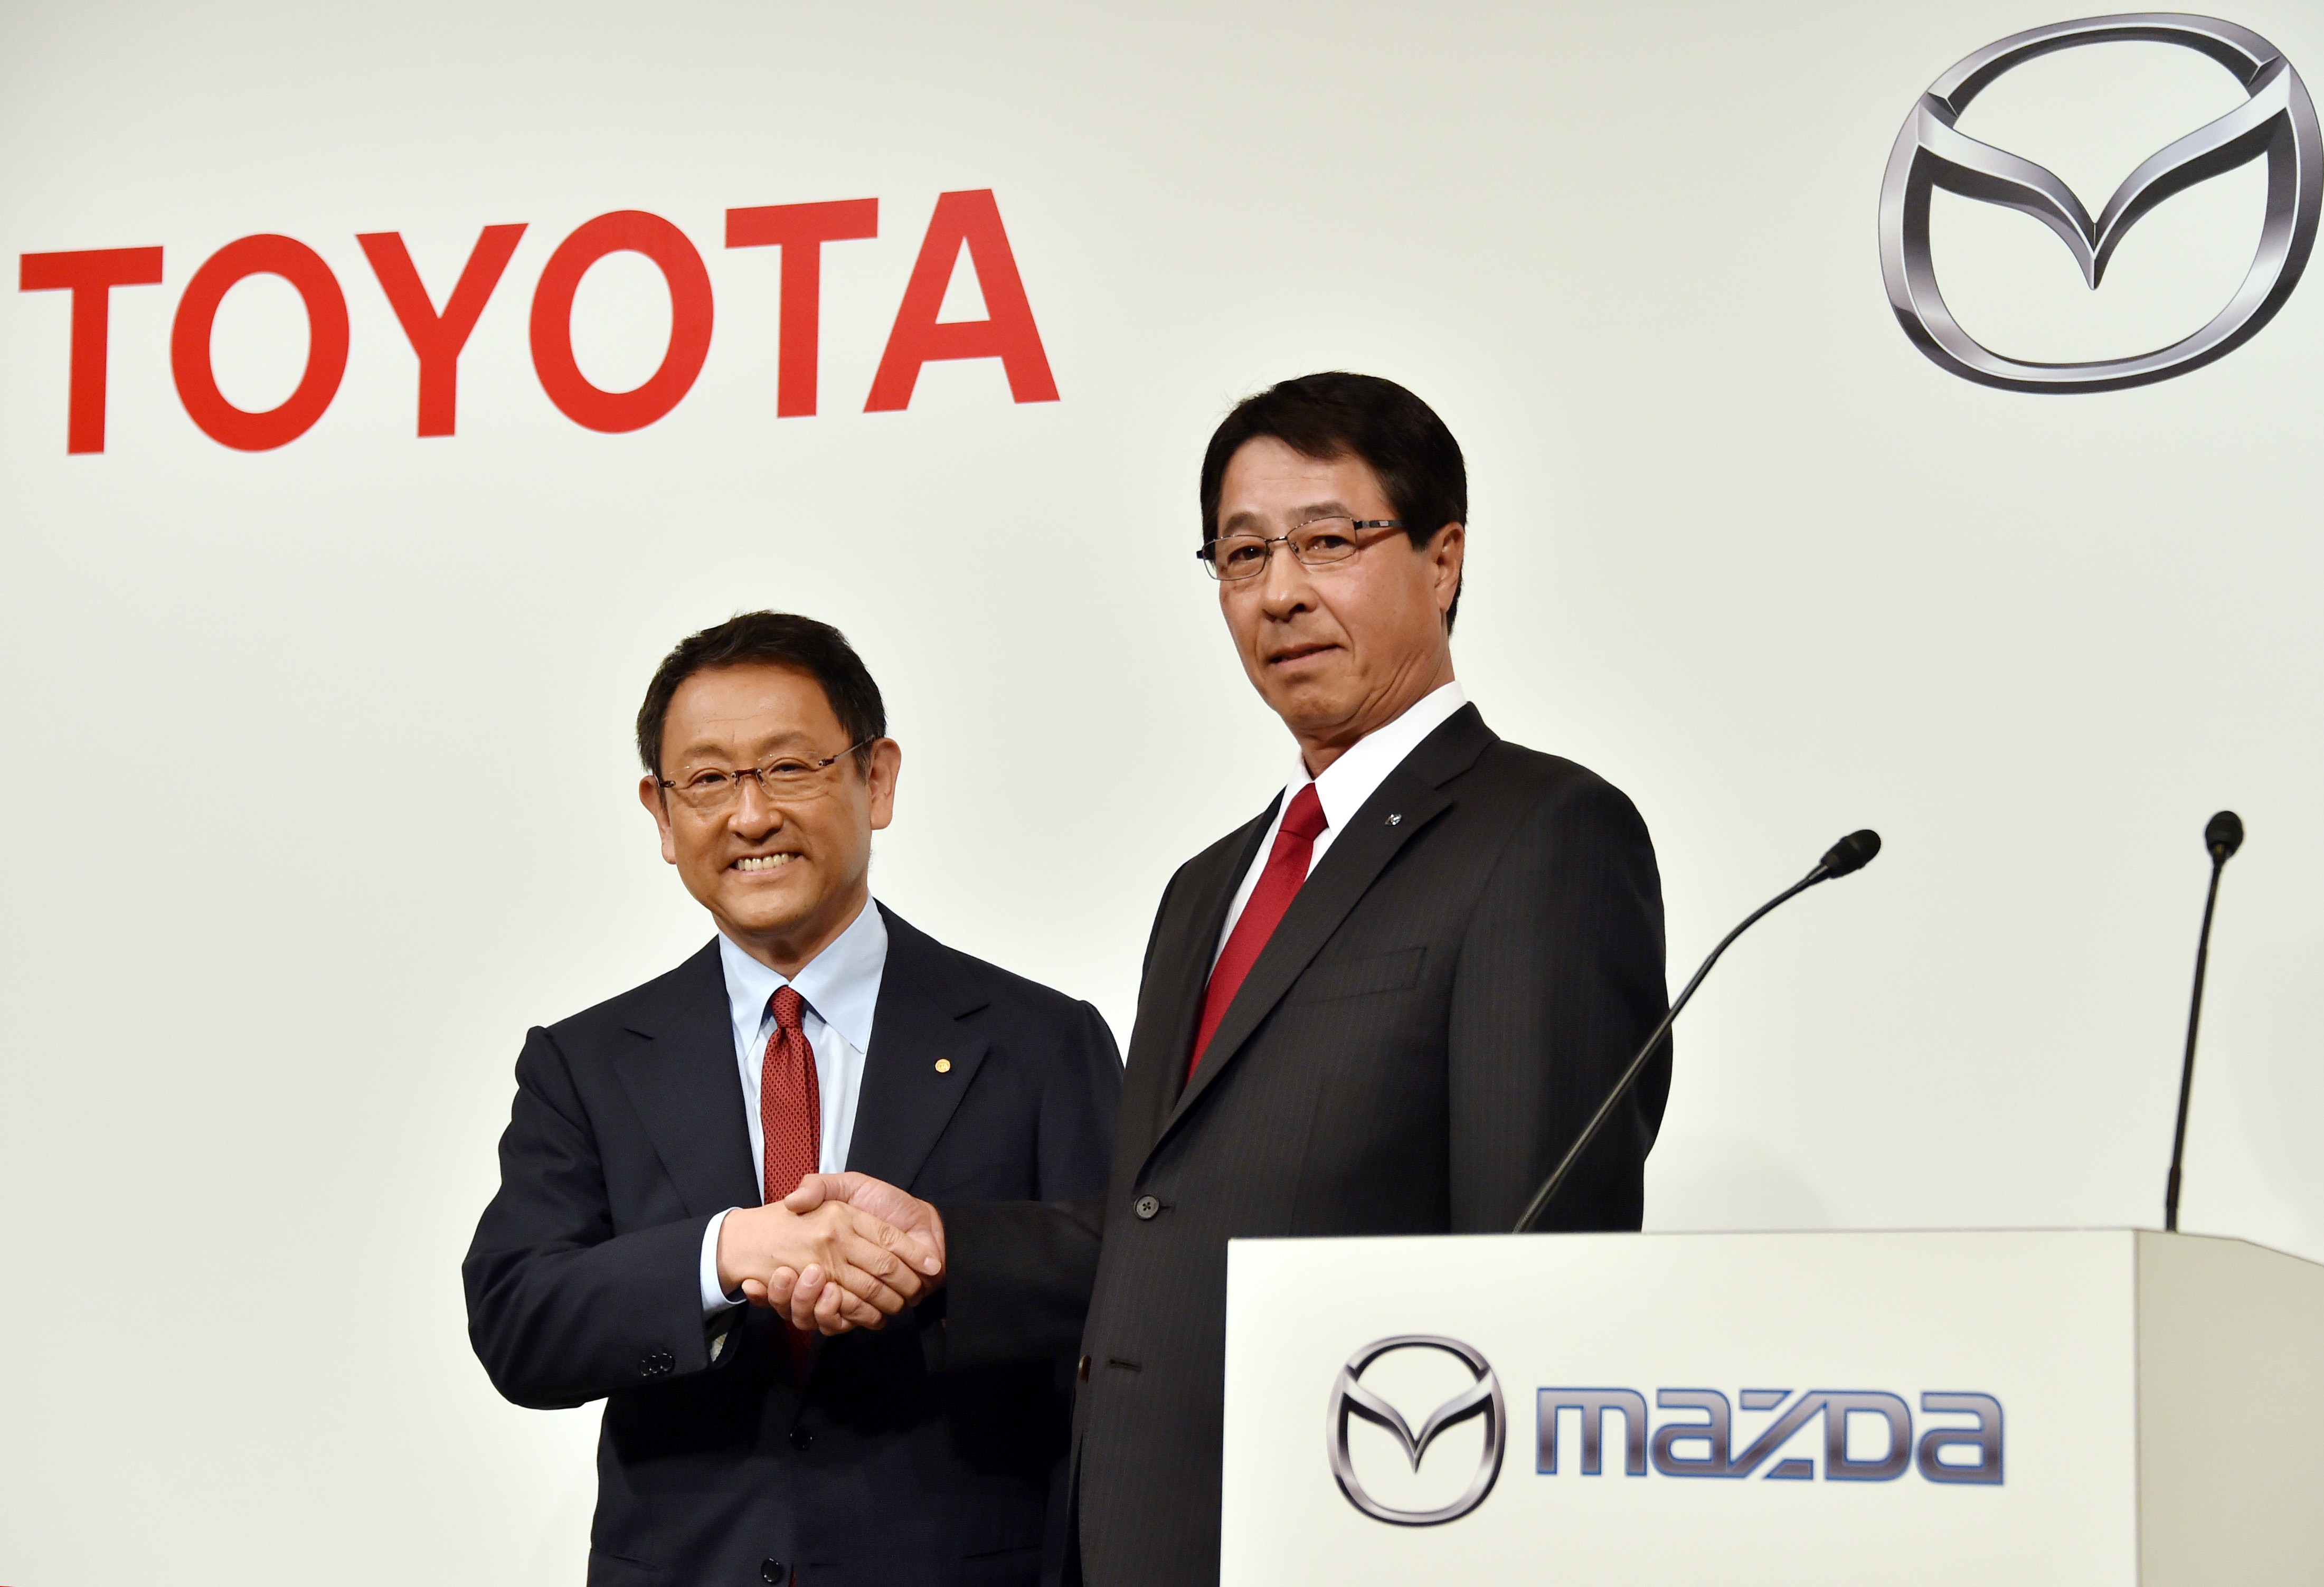 Toyota president and Mazda president shake hands